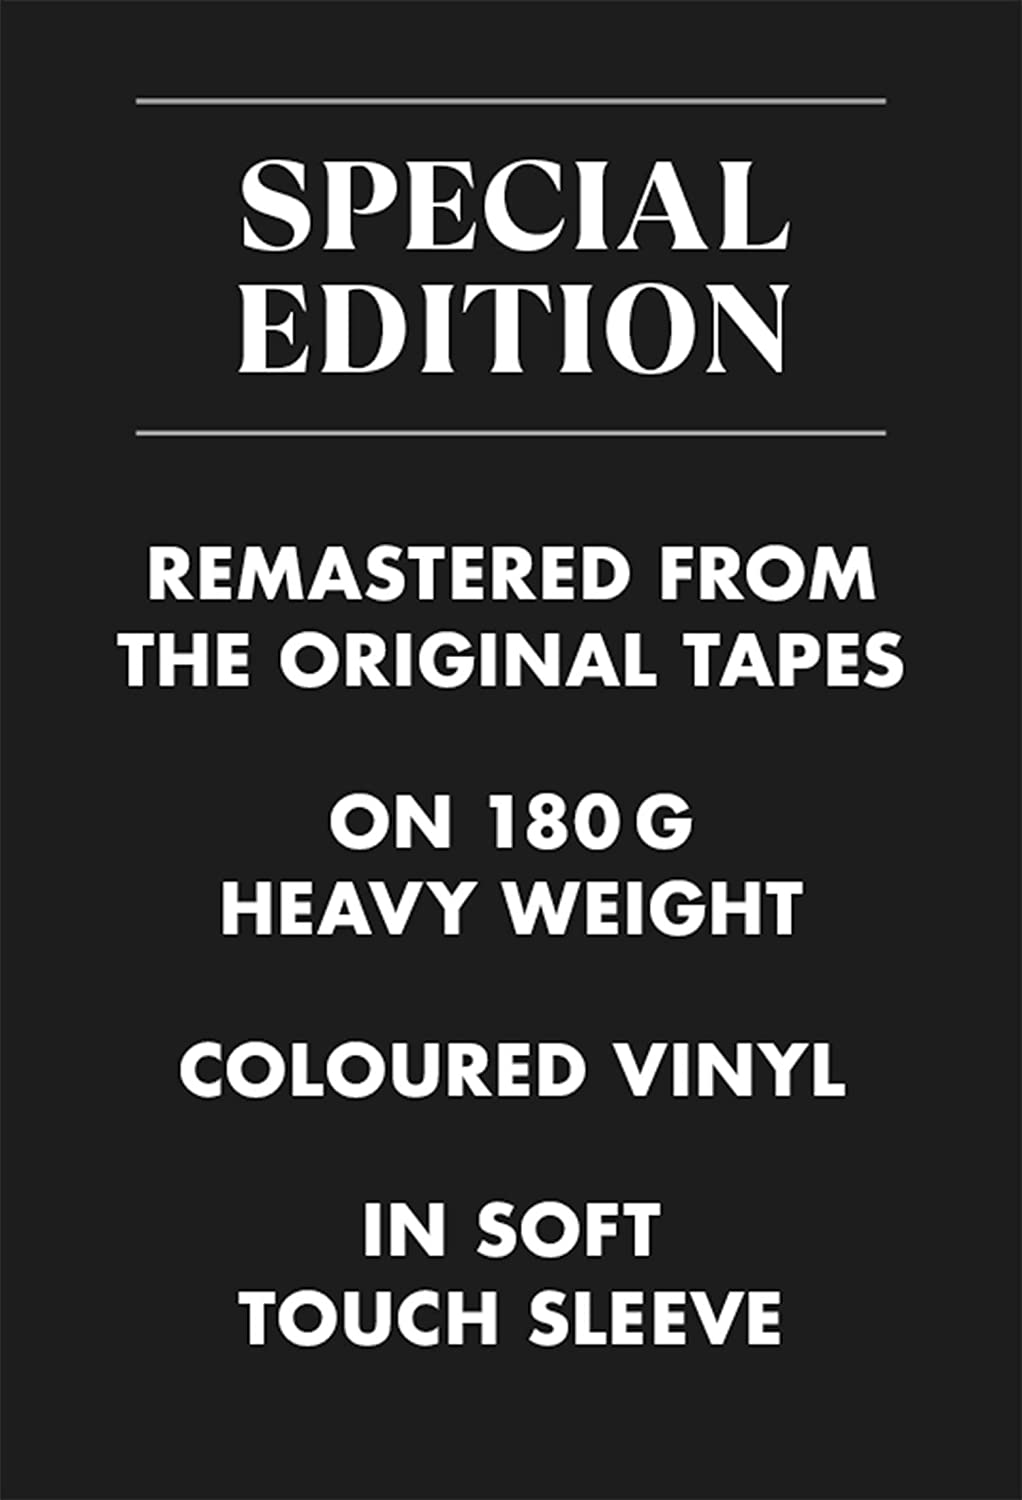 SCORPIONS - Lovedrive (Remastered - 2023 Reissue) - LP - 180g Transparent Red Vinyl